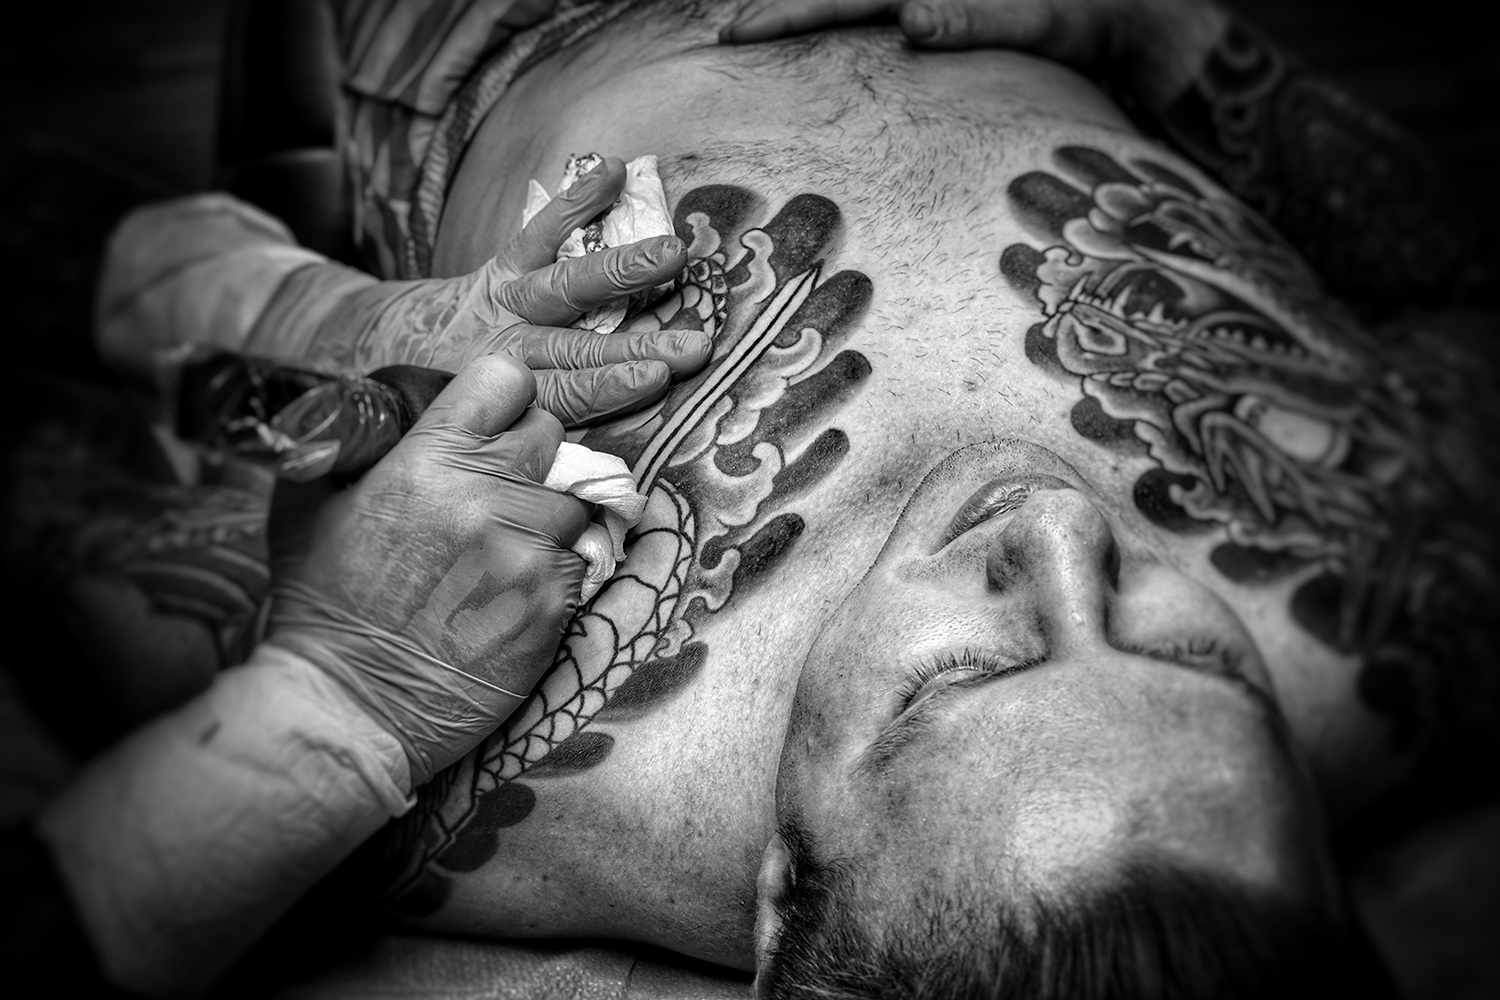 Tattooing the Hikae chest panel on client Smoleg